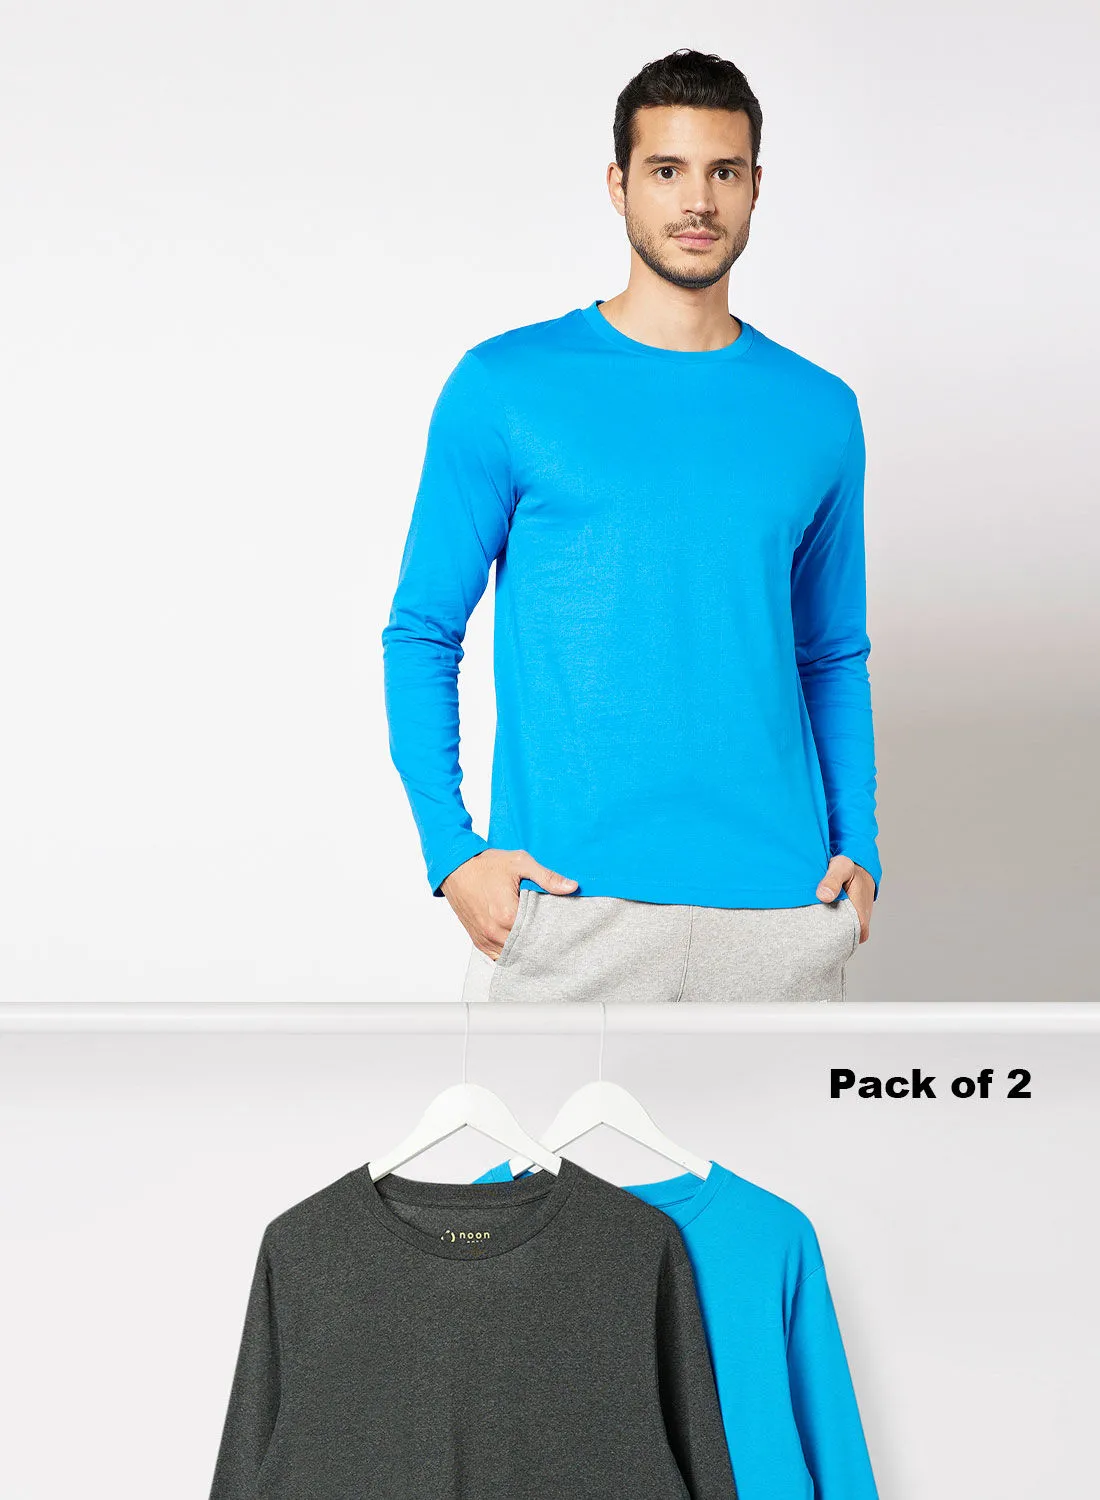 Noon East Pack Of 2 Men's Basic Crew Neck Cotton Biowashed Fabric Comfort Fit Stylish Design T-Shirt Charcoal Melange/Blue